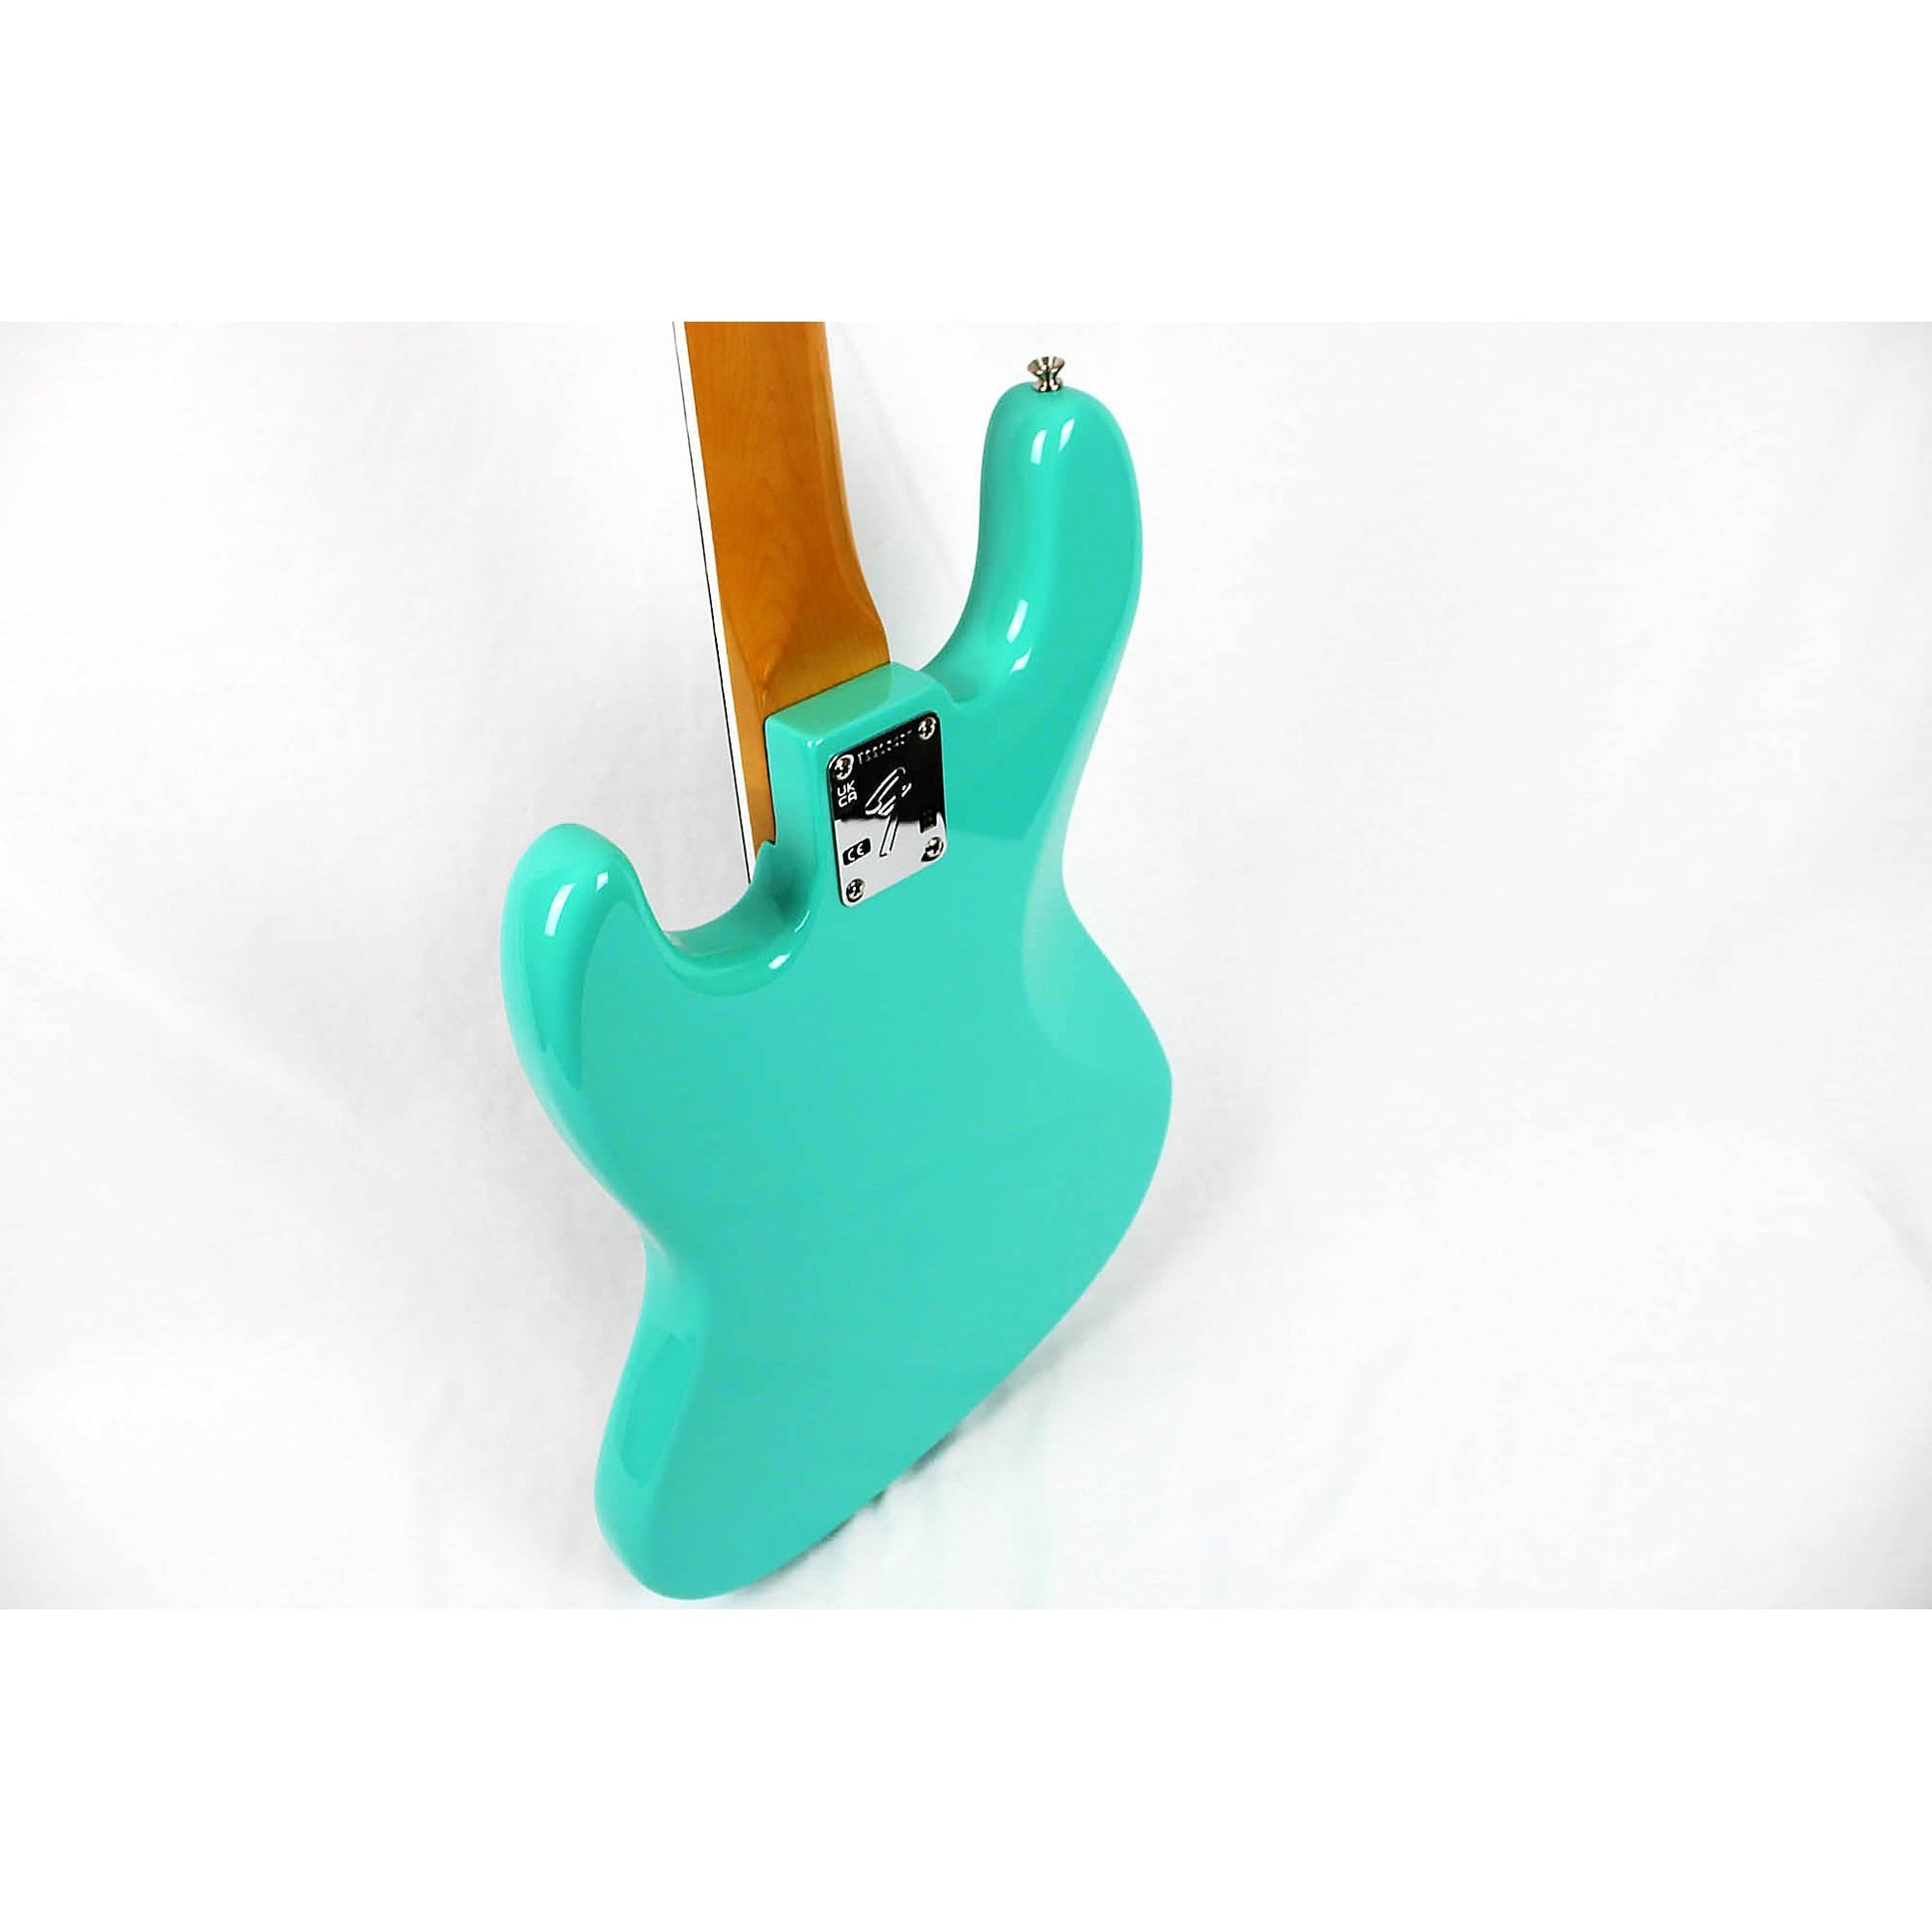 Fender American Vintage II 66 Jazz Bass - Sea Foam Green - Leitz Music-885978841028-0190170849